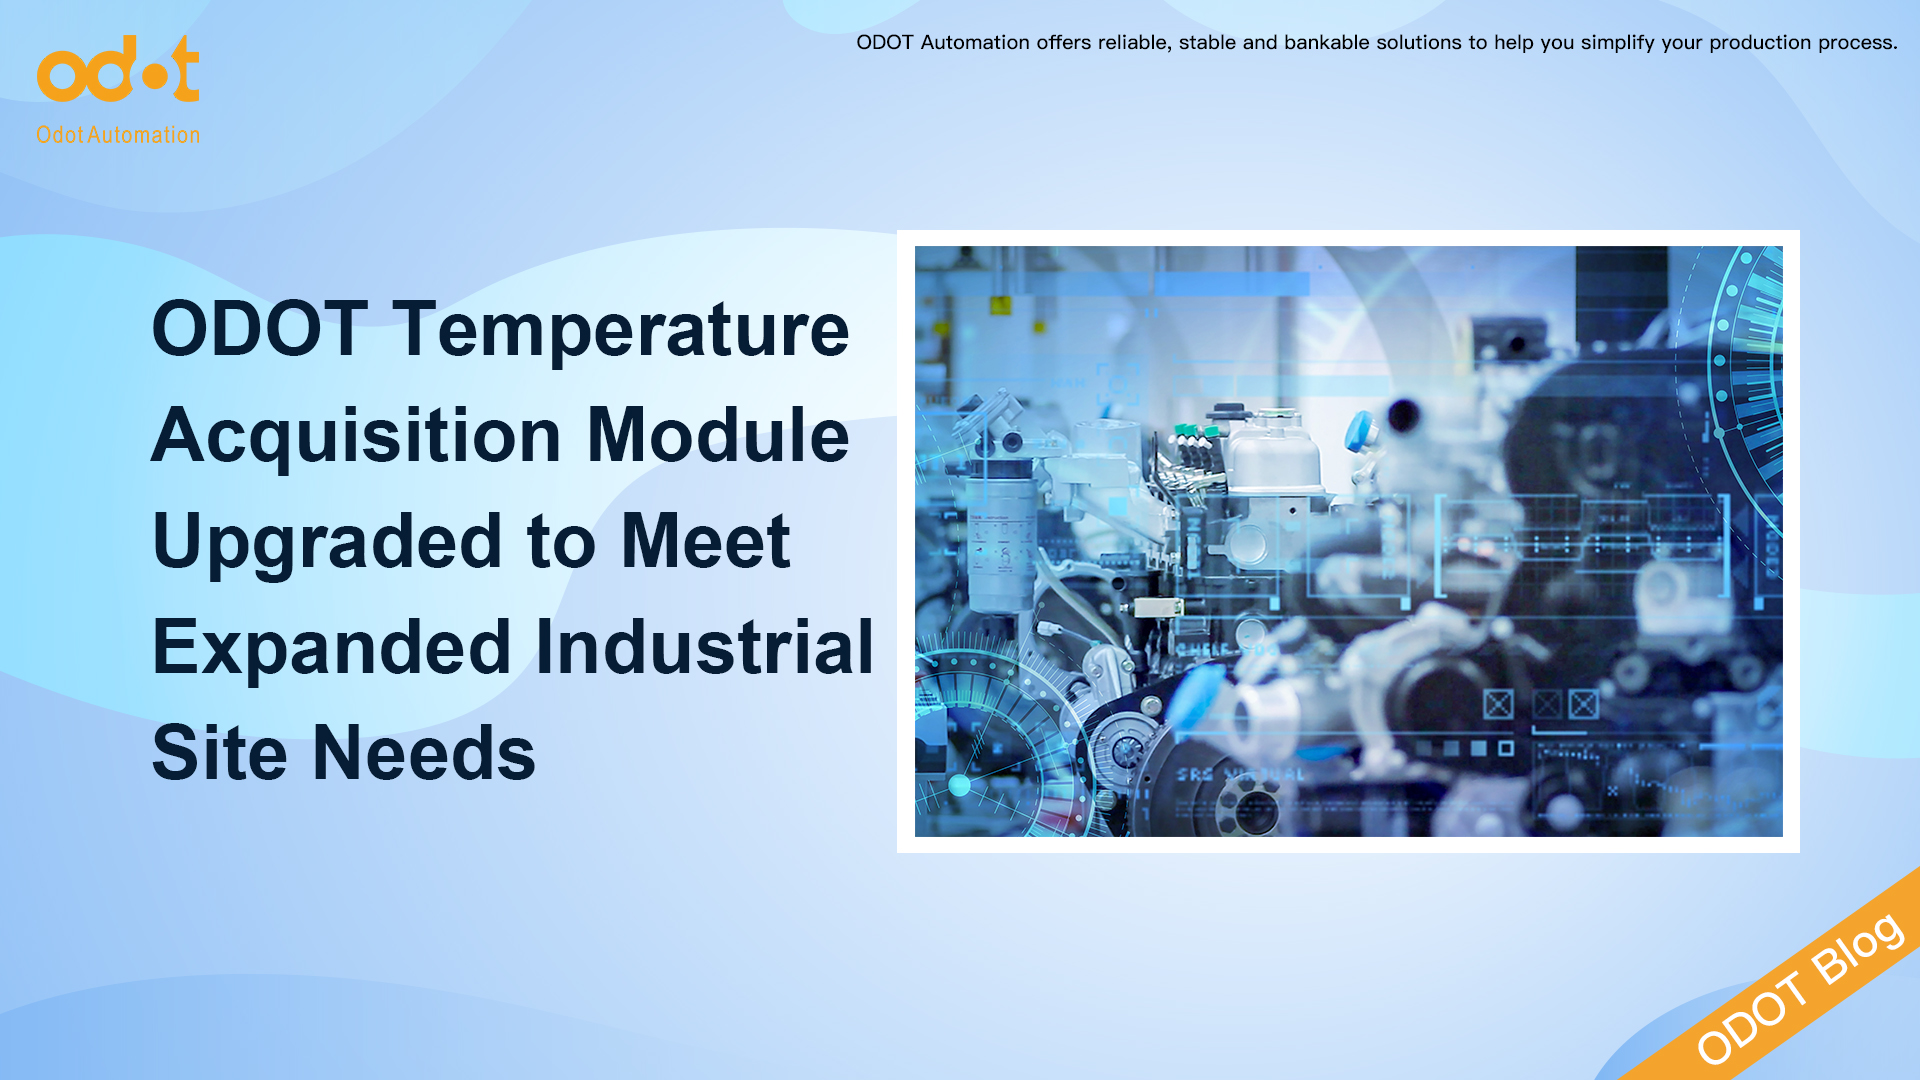 ODOT તાપમાન સંપાદન મોડ્યુલ વિસ્તૃત ઔદ્યોગિક સાઇટની જરૂરિયાતોને પહોંચી વળવા અપગ્રેડ કરવામાં આવ્યું